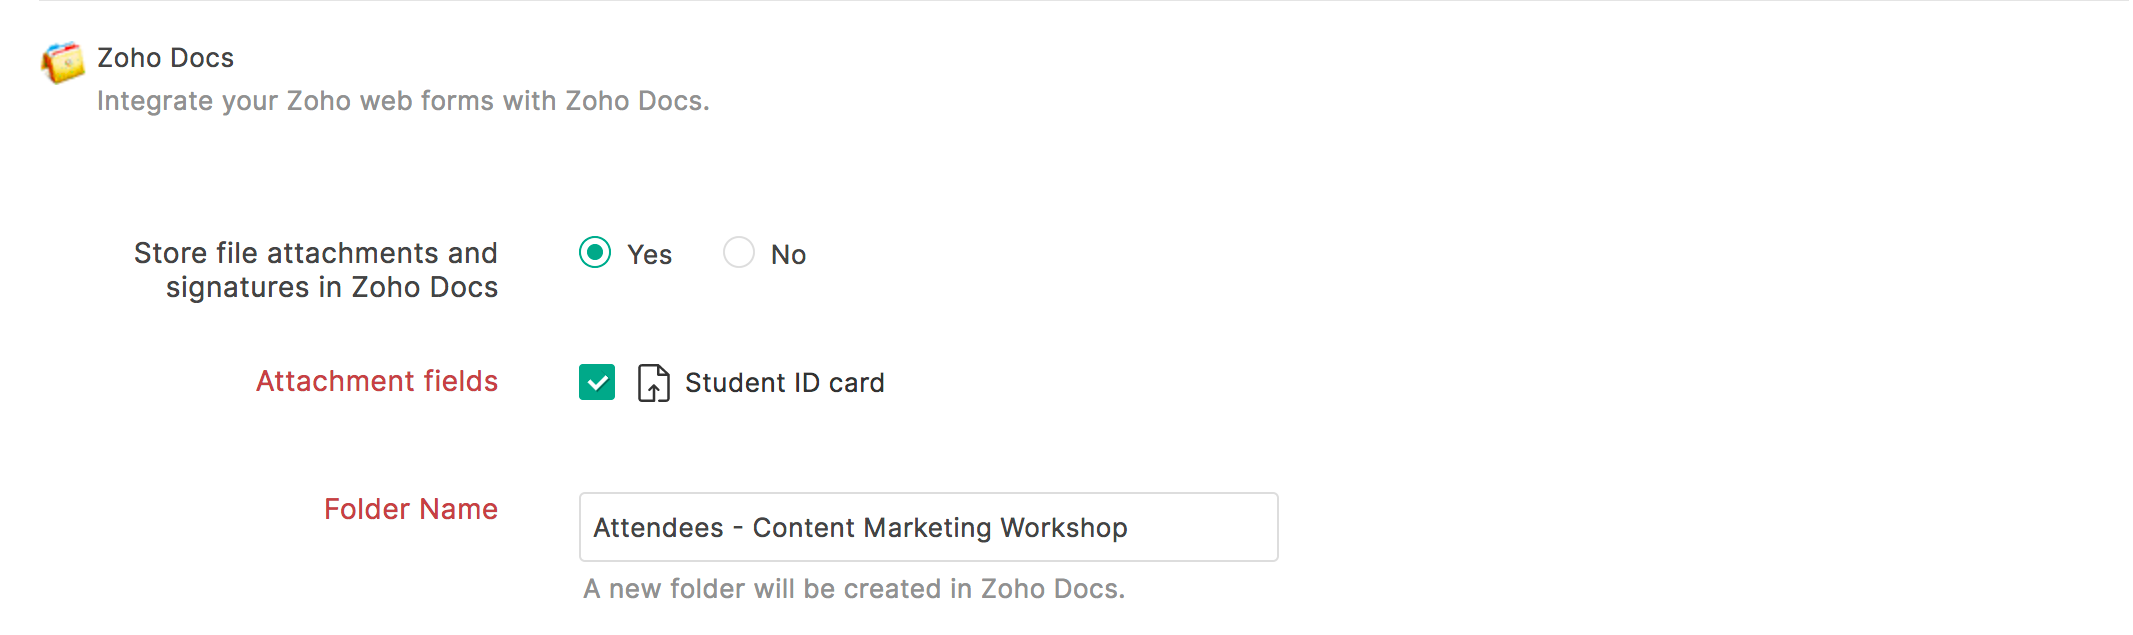 Save form attachments to Zoho Docs - Zoho Sheet Integration